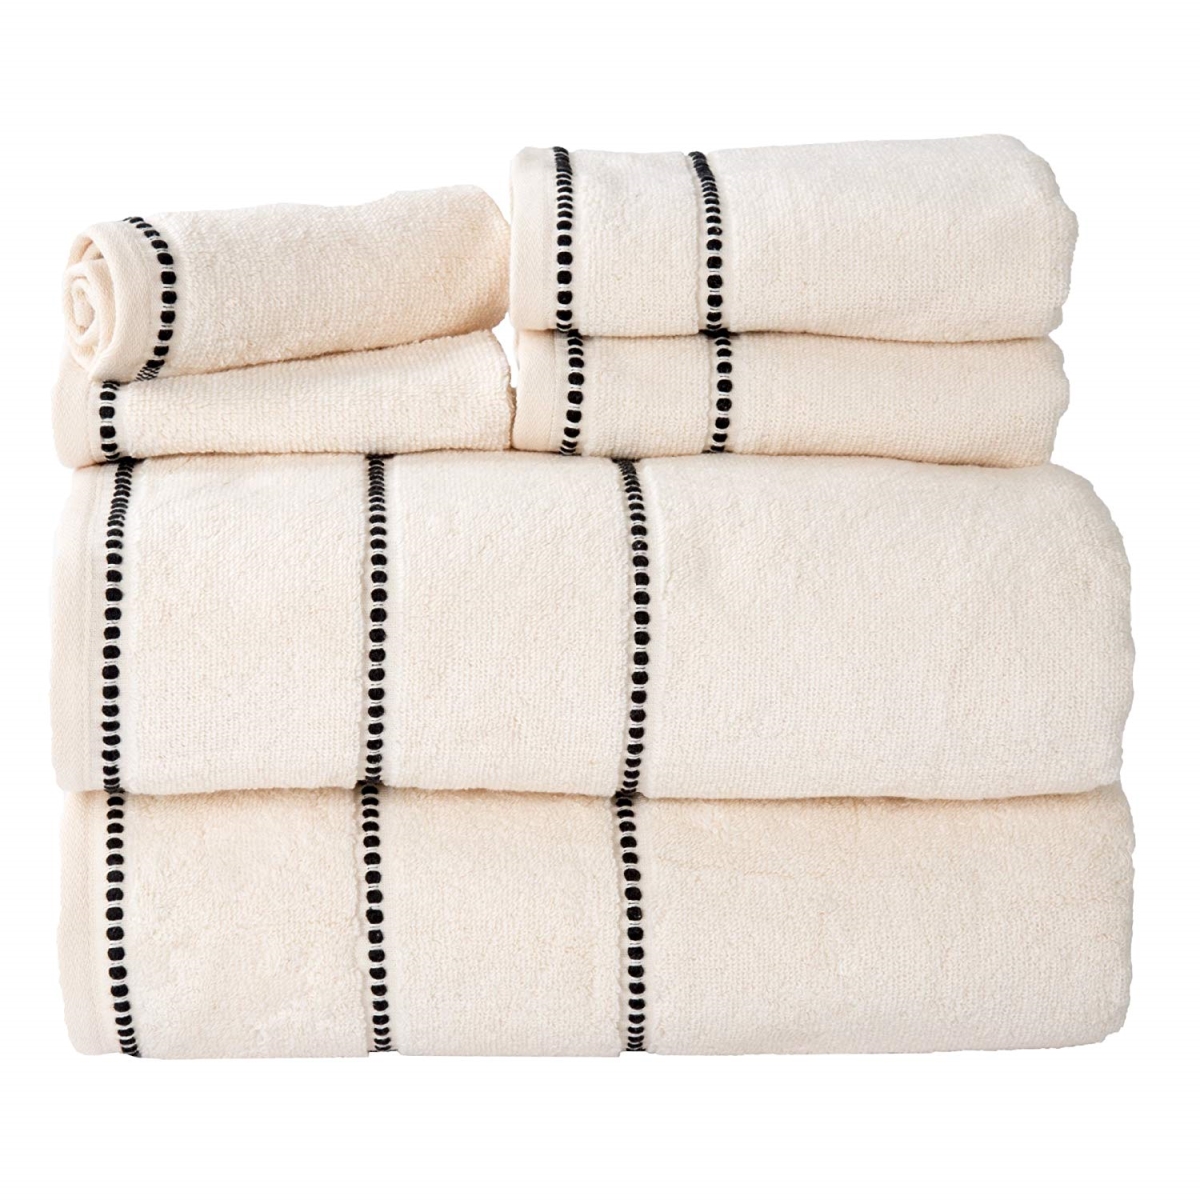 67a-76887 Quick Dry 100 Percent Cotton Zero Twist 6 Piece Towel Set - Bone